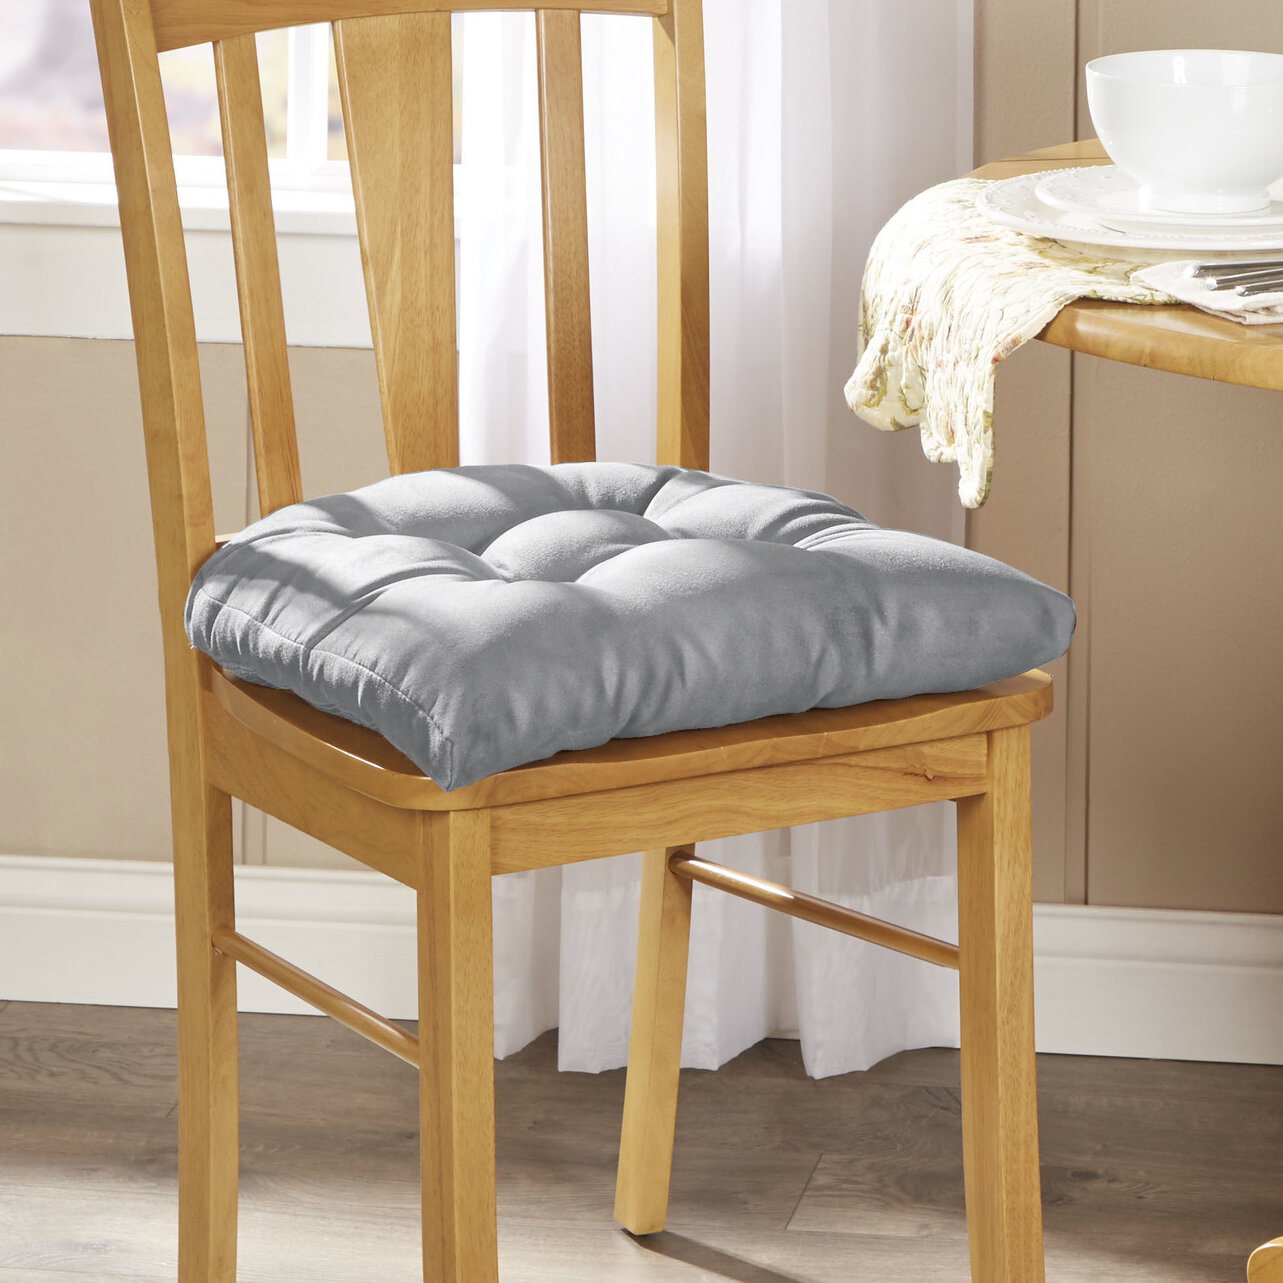 Wayfair Basics Dining Chair Cushion Reviews Wayfair